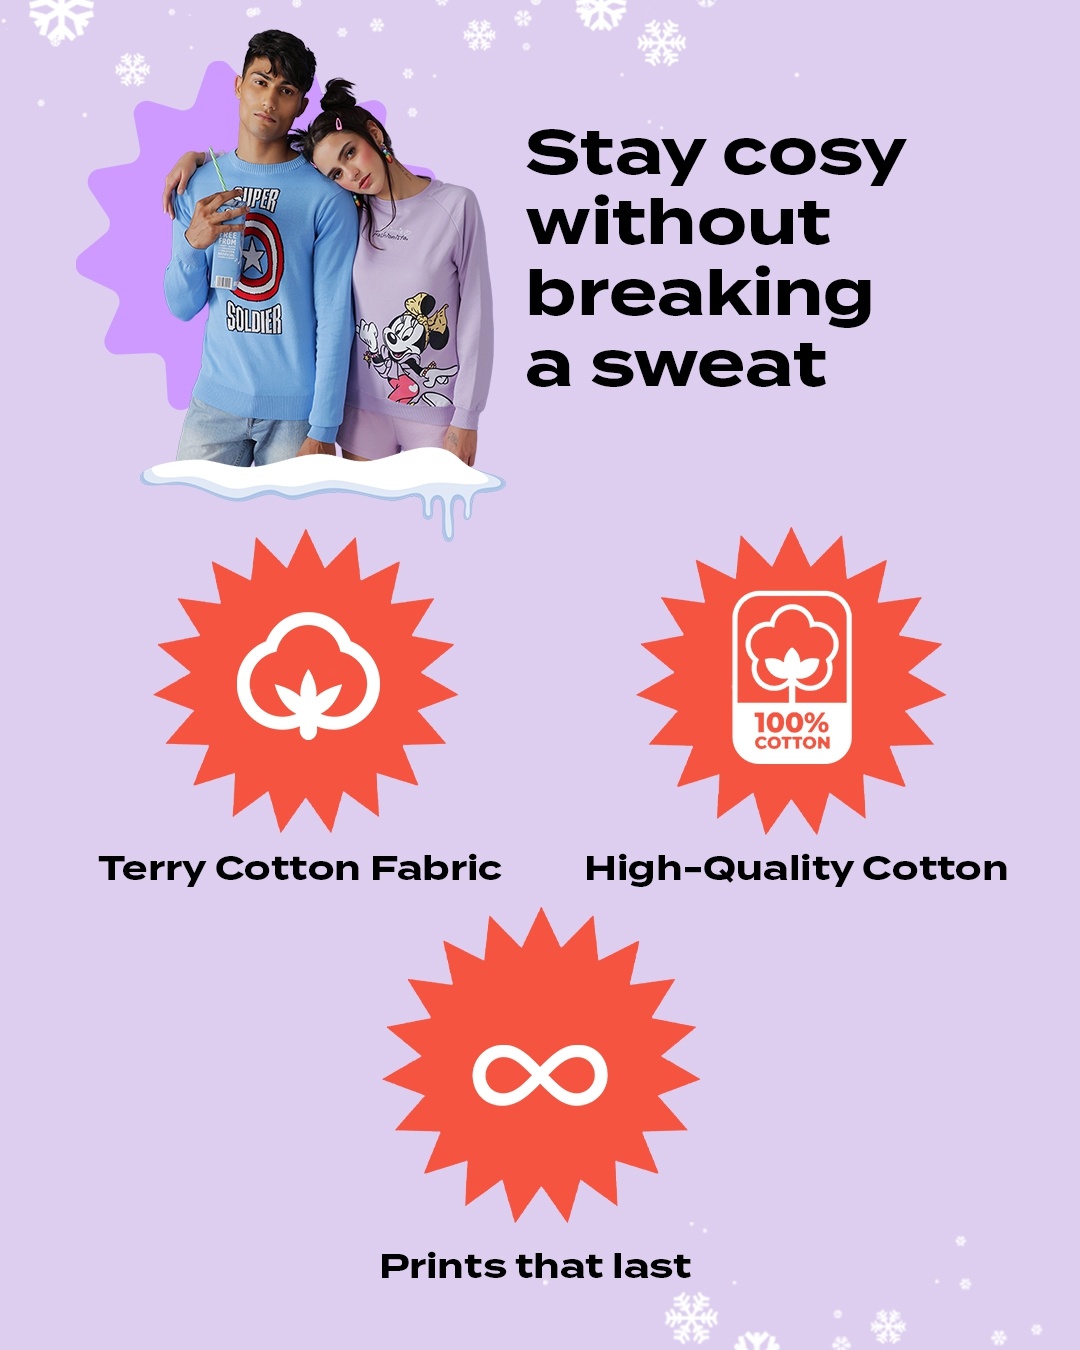 Shop Trap Mickey Fleece Sweatshirt